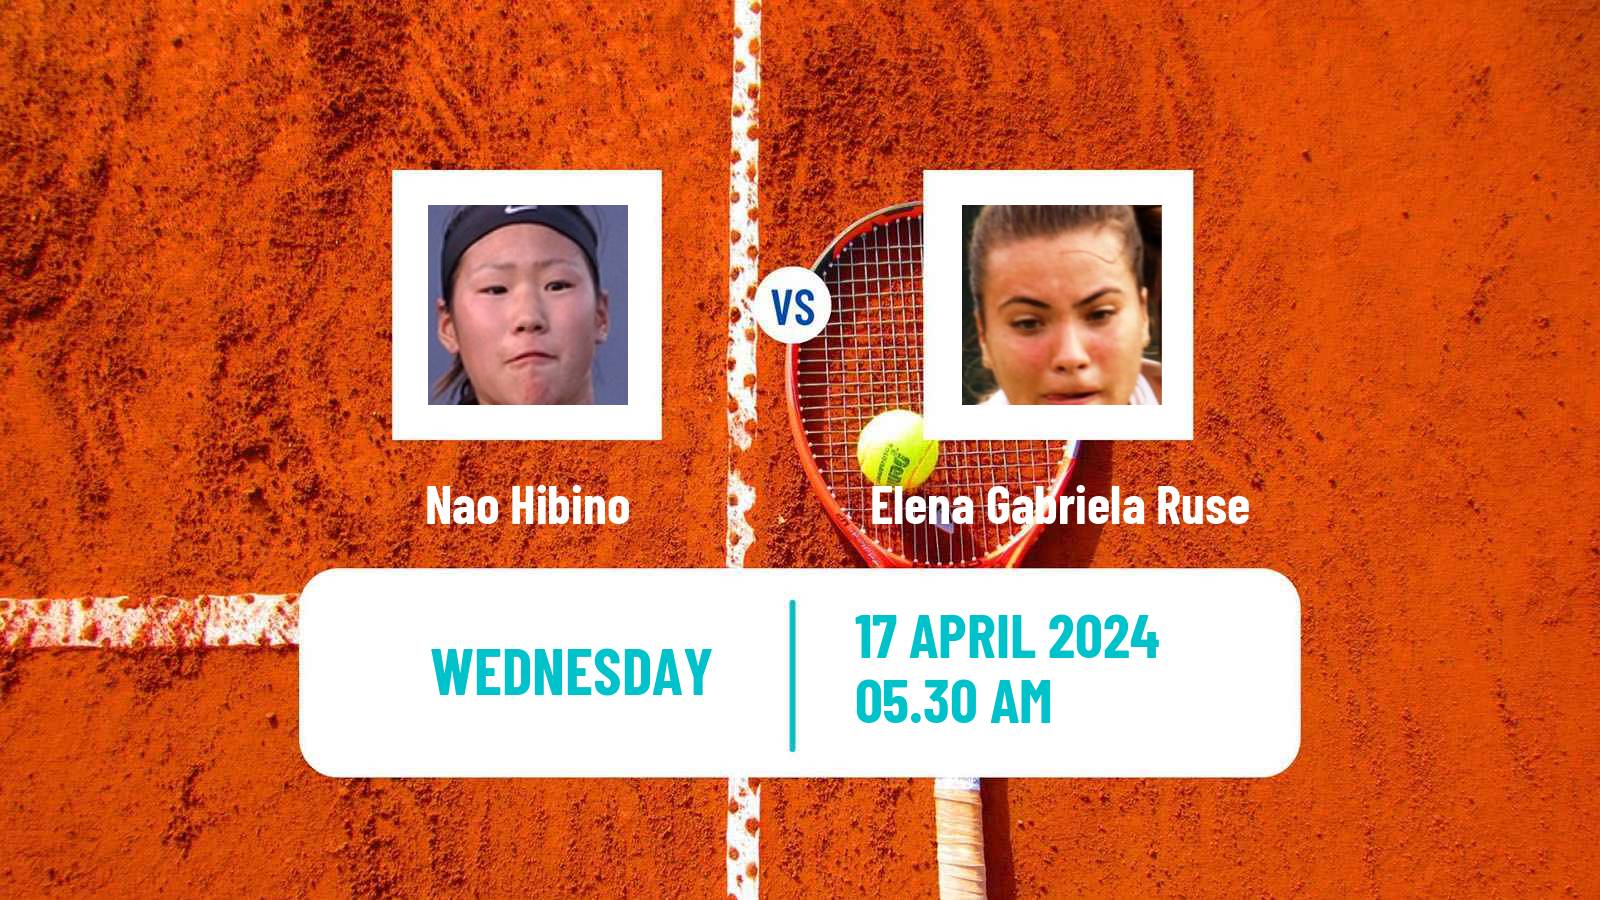 Tennis WTA Rouen Nao Hibino - Elena Gabriela Ruse